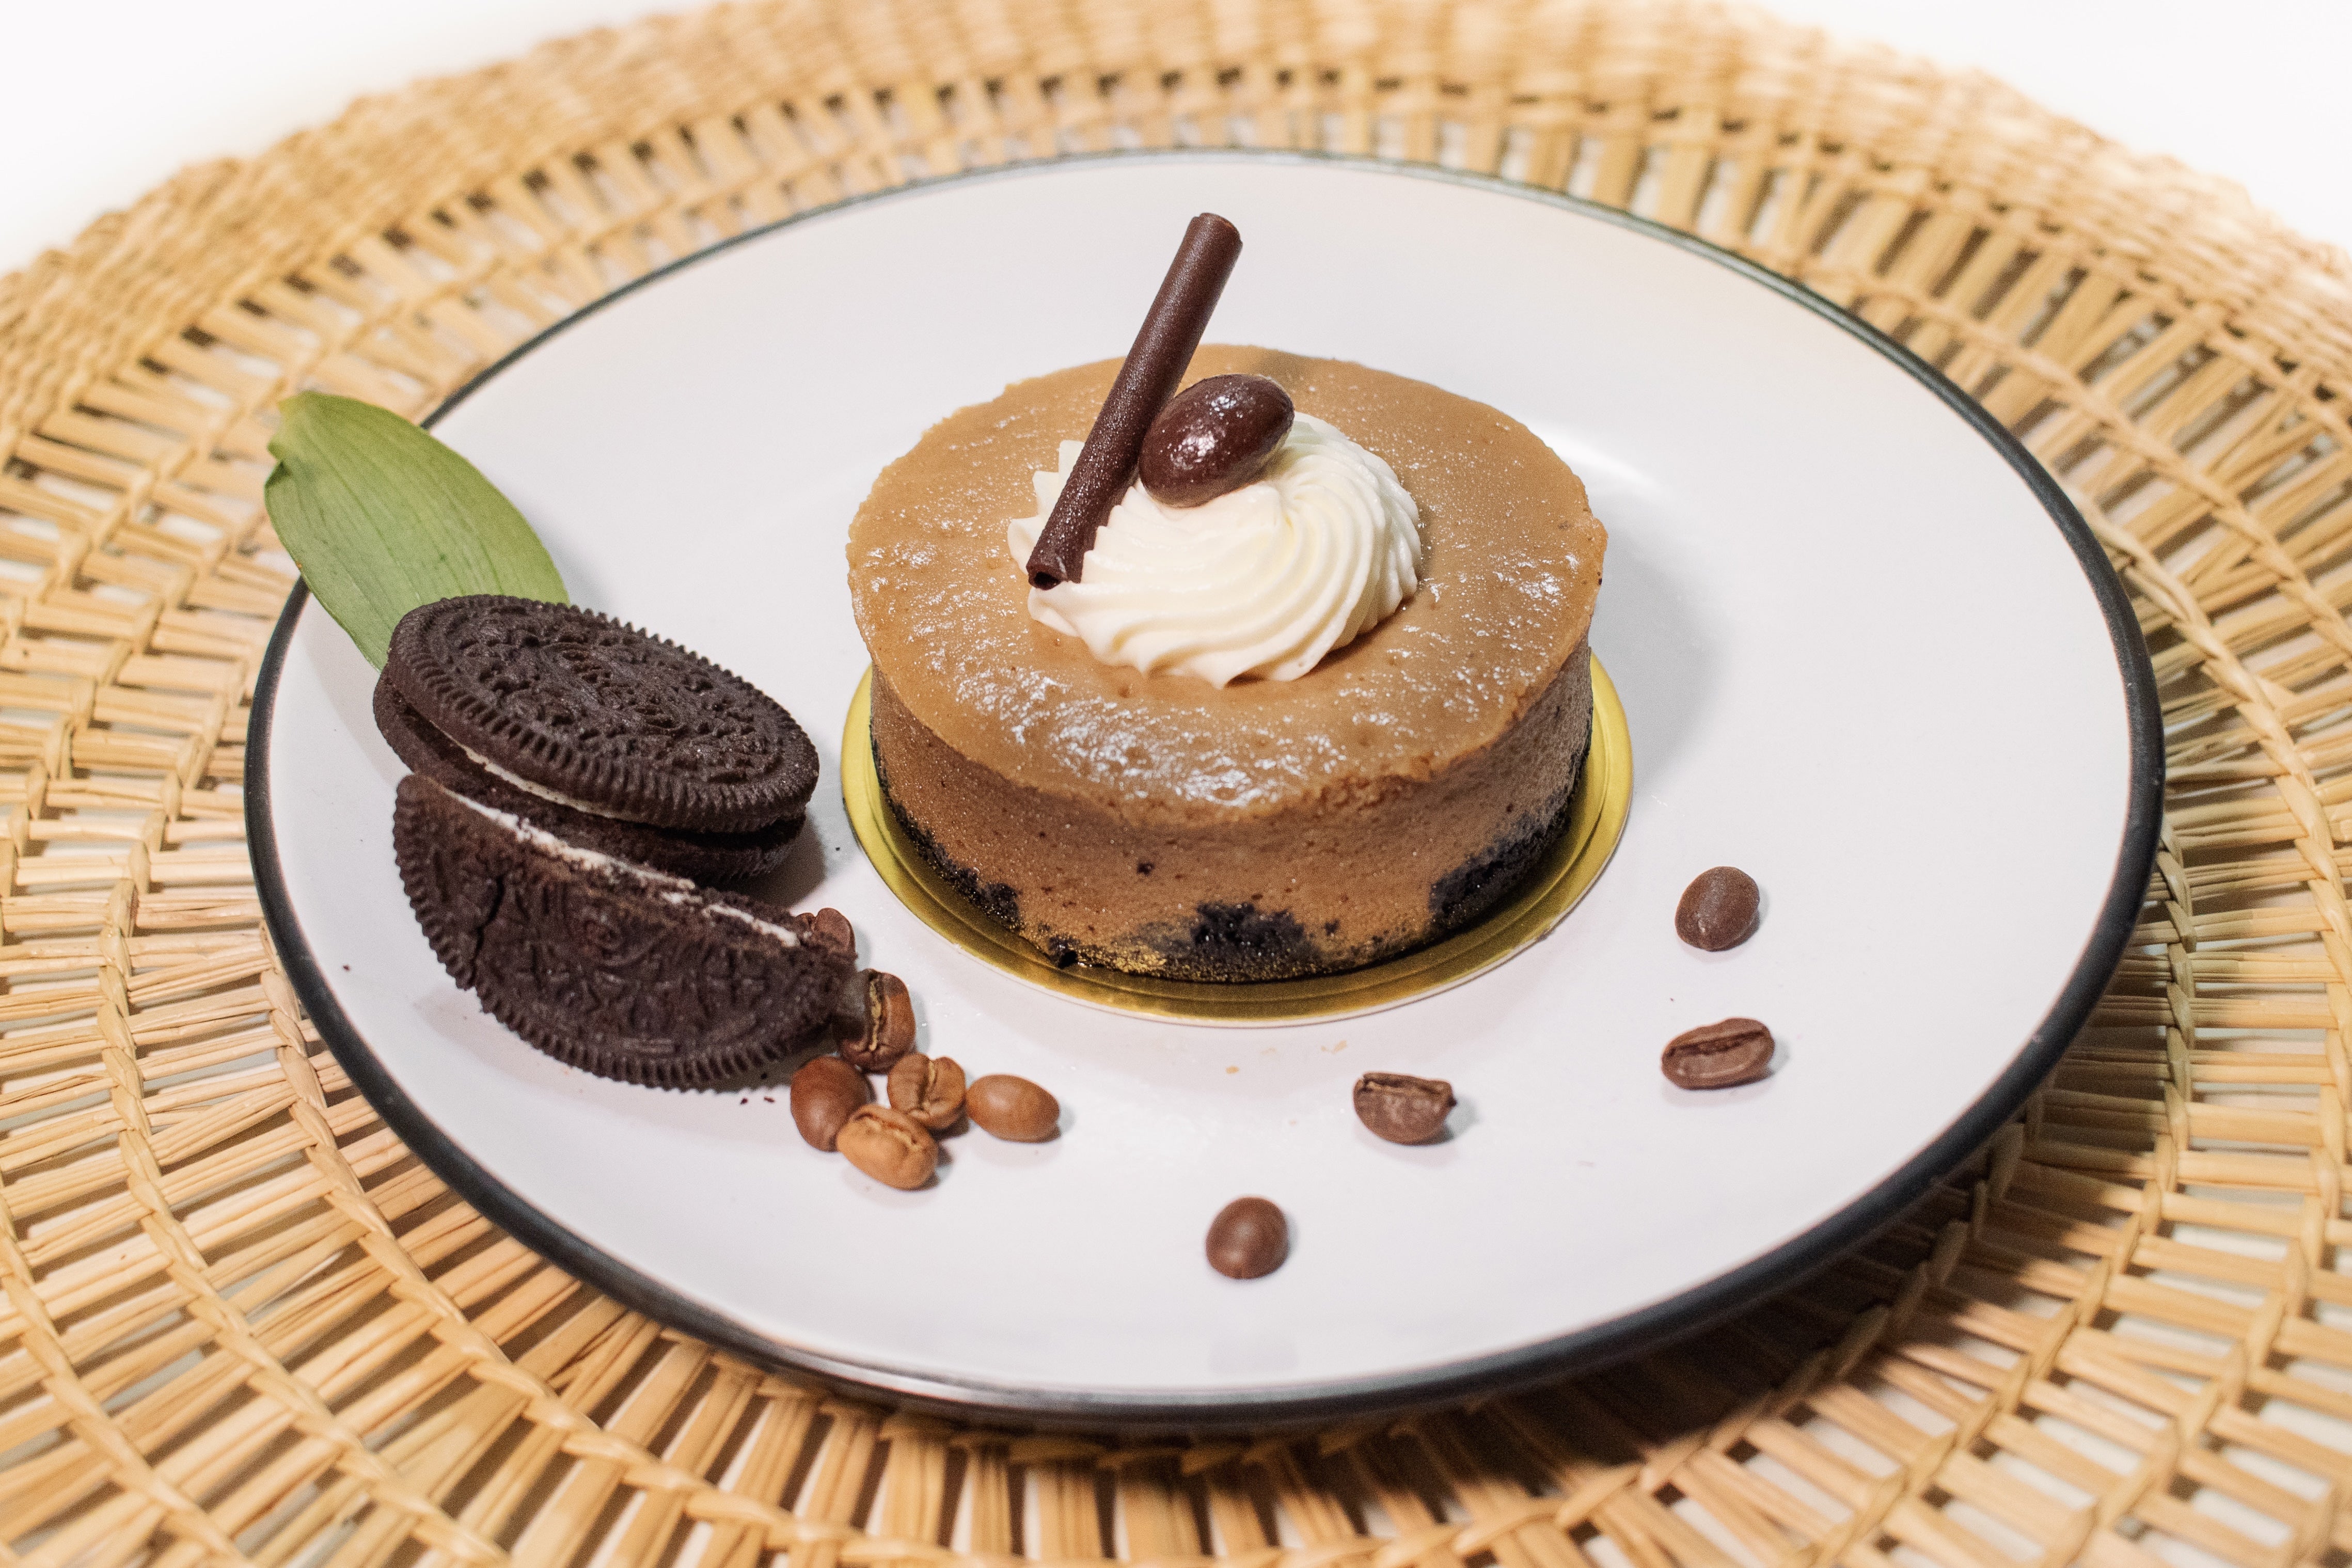 Fall seasonal menu item - Coffee Cheesecake with Oreo crust